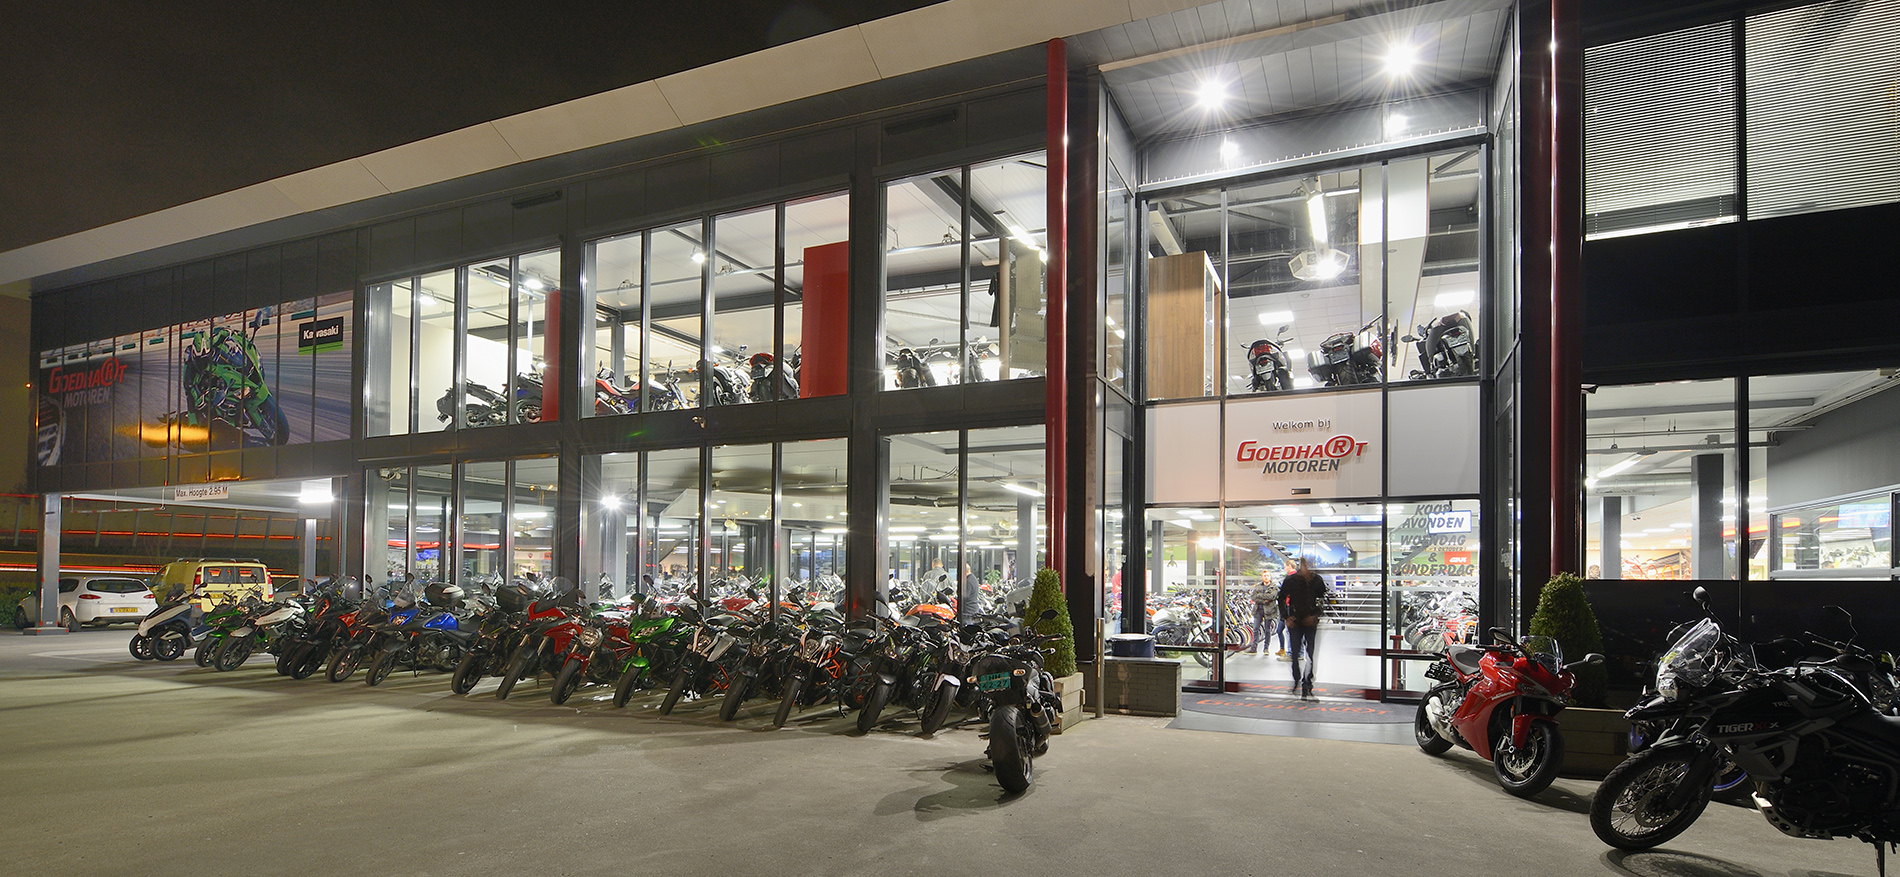 Goedhart Motorbikes: interior design by WSB - Sport store